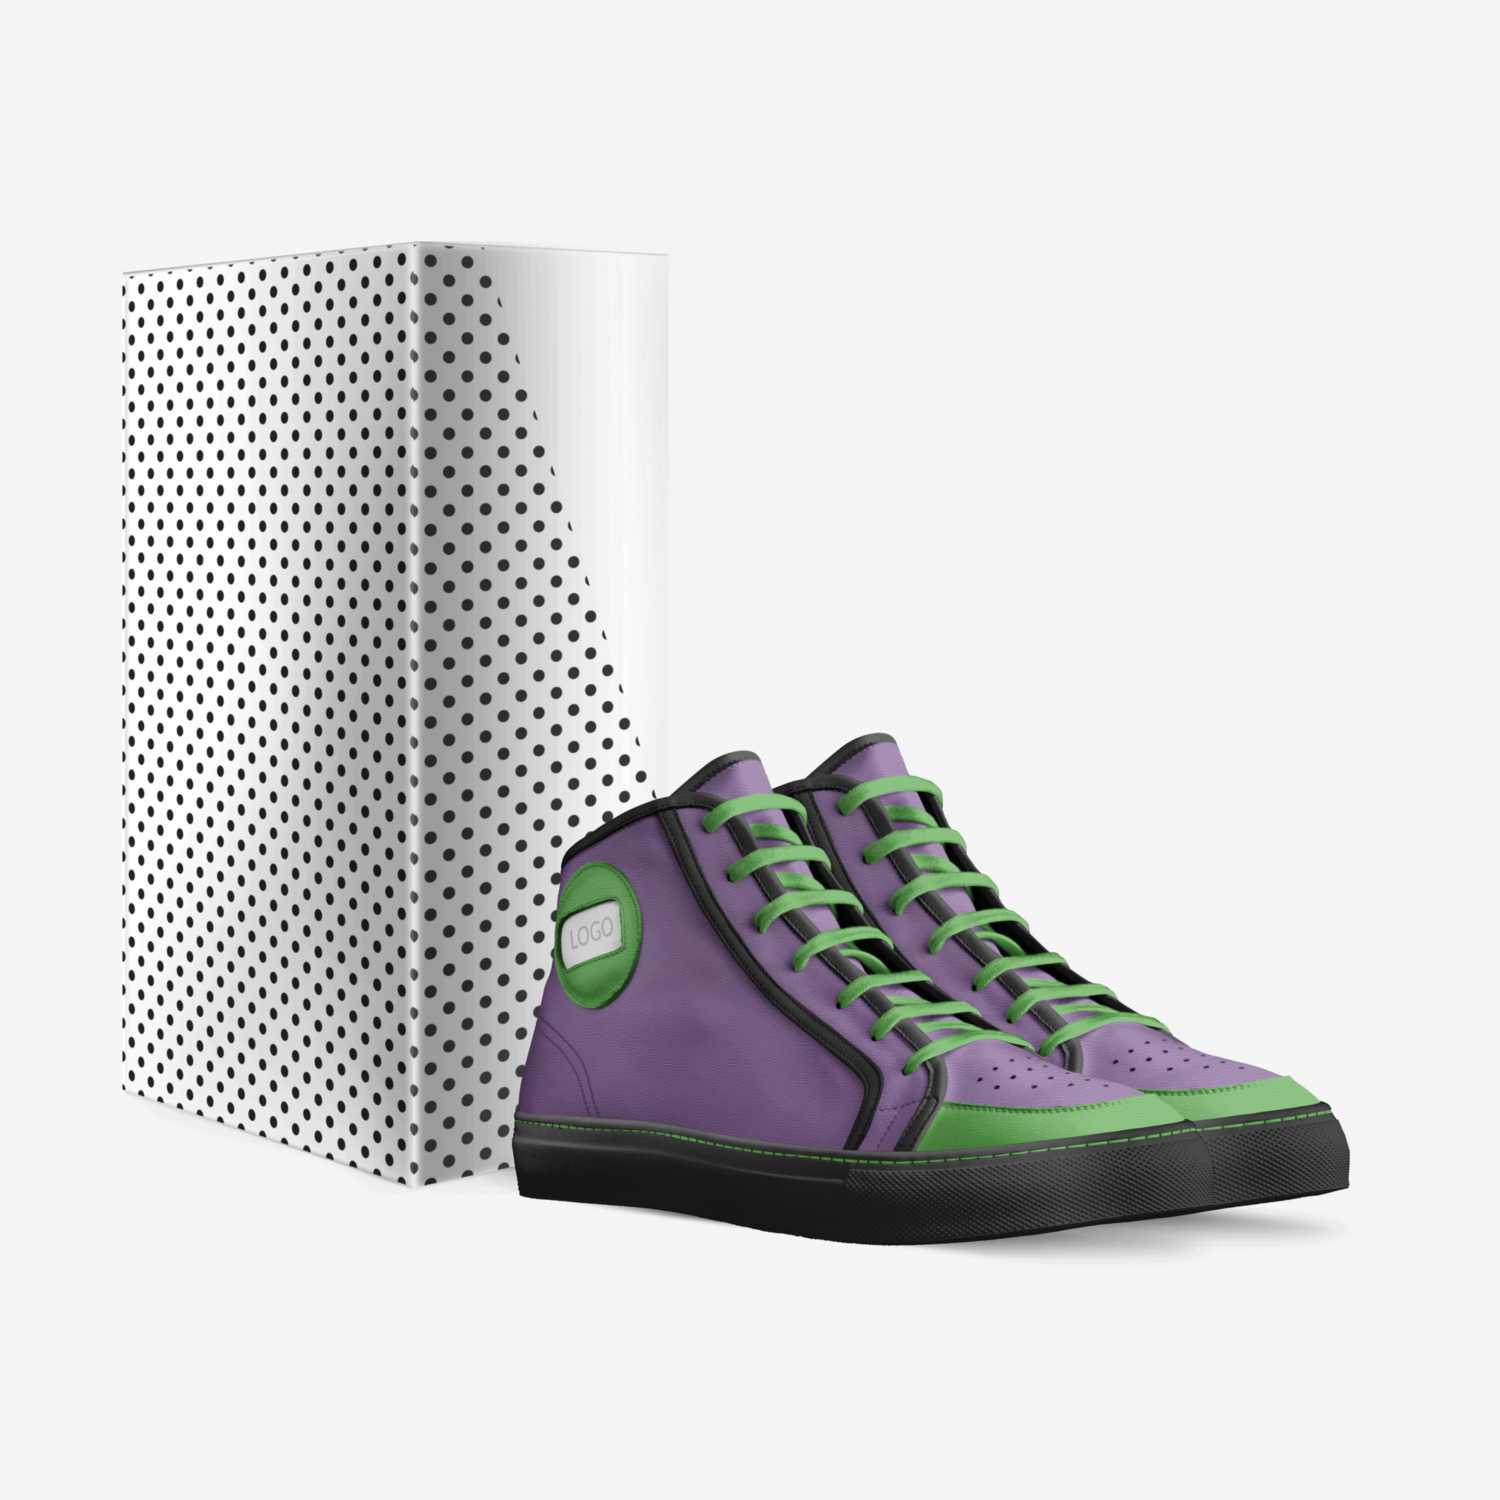 L.RAEKO custom made in Italy shoes by Lanon Raeko | Box view